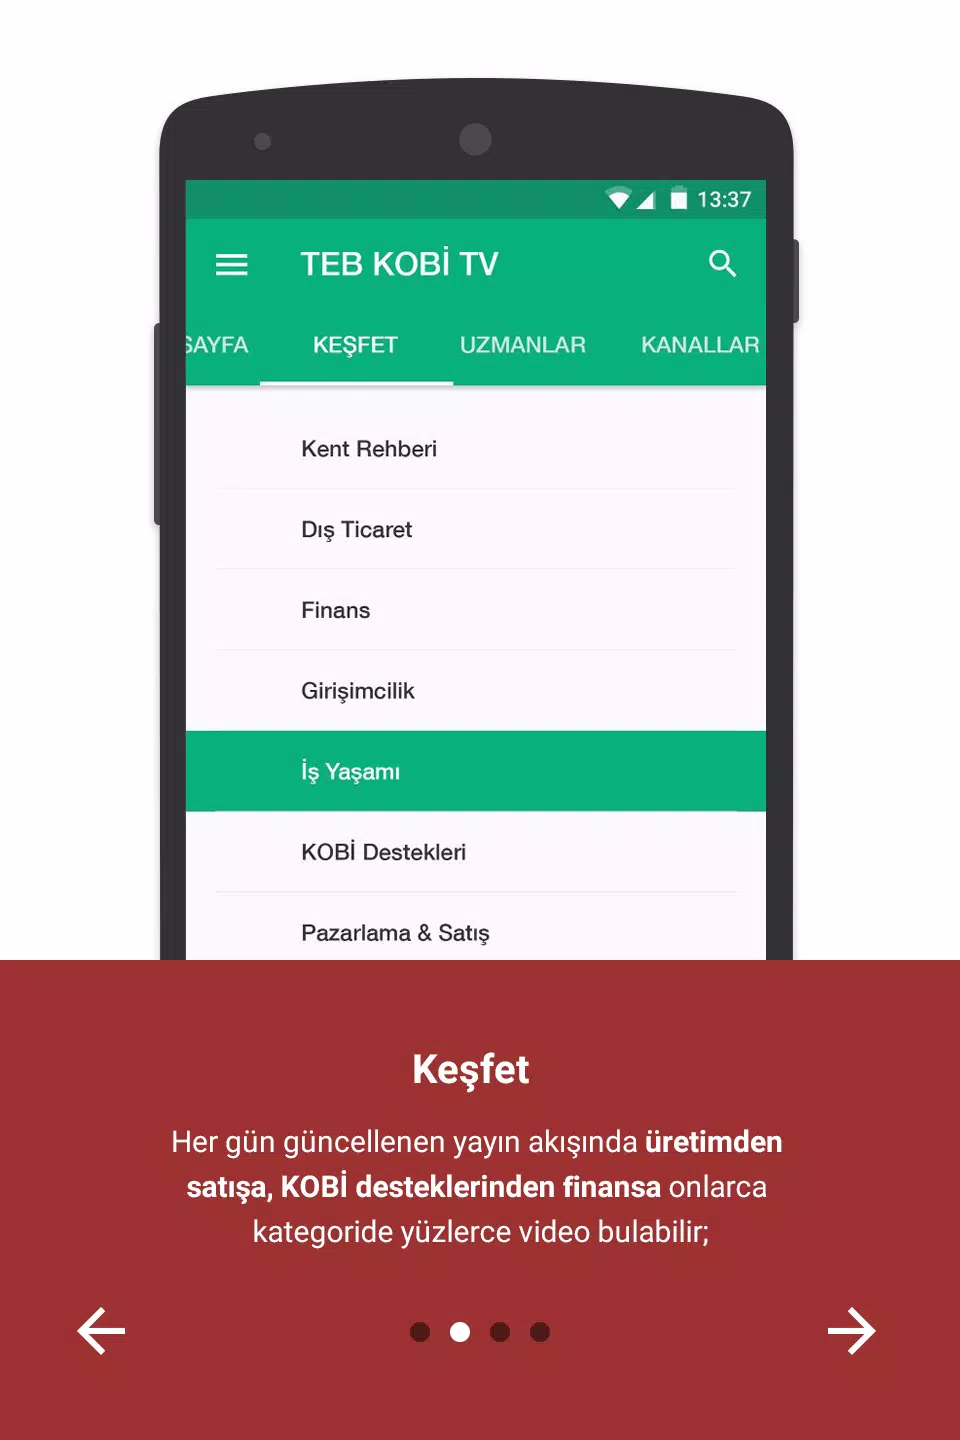 TEB KOBİ TV APK for Android Download